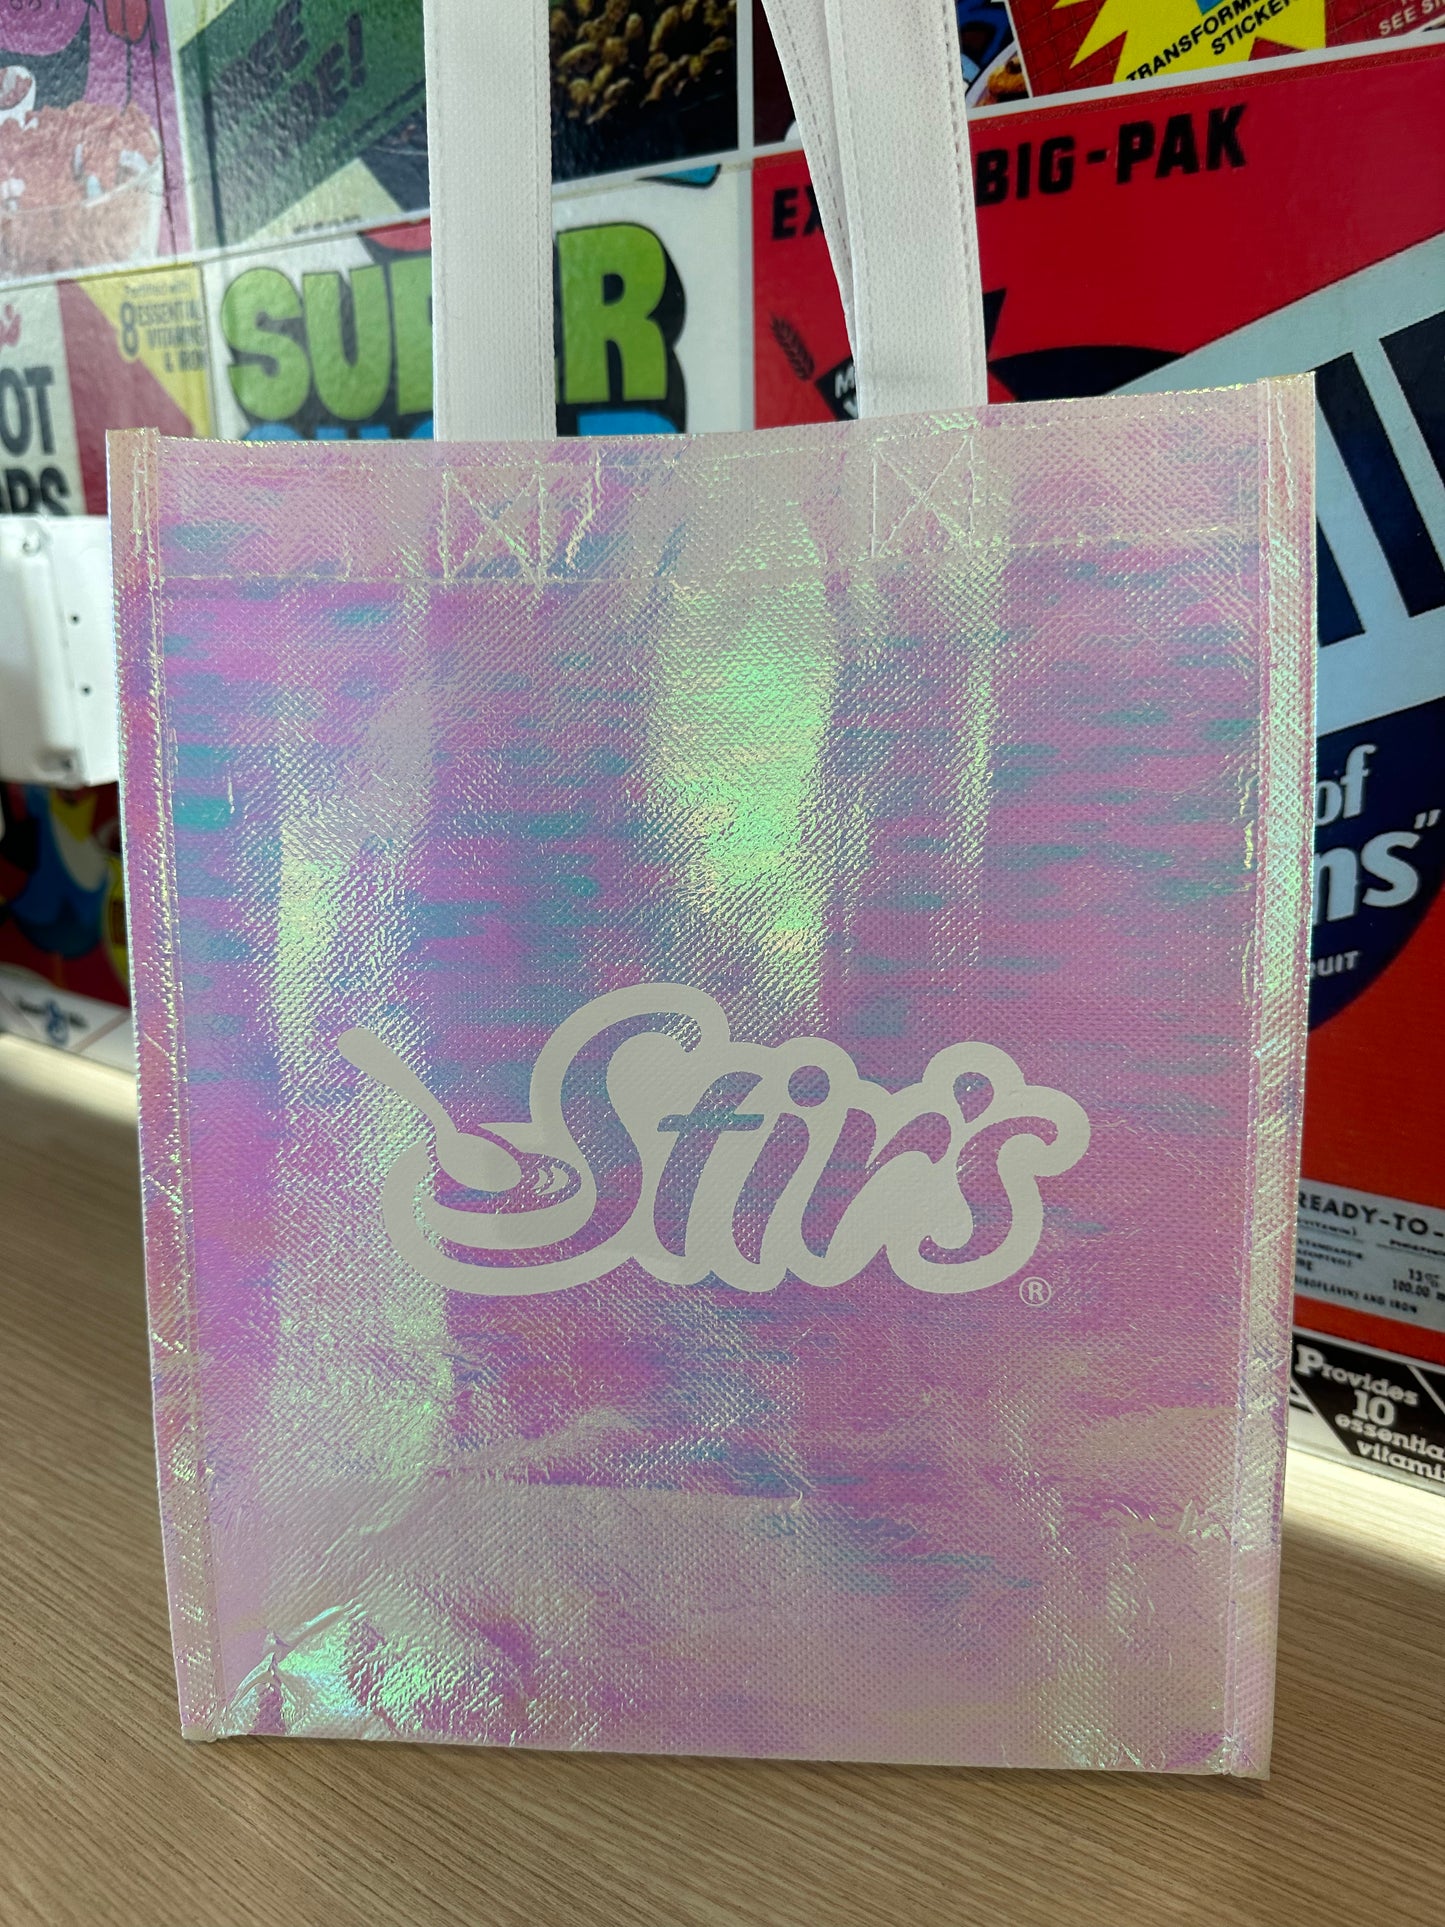 Stir's Iridescent Small Bag